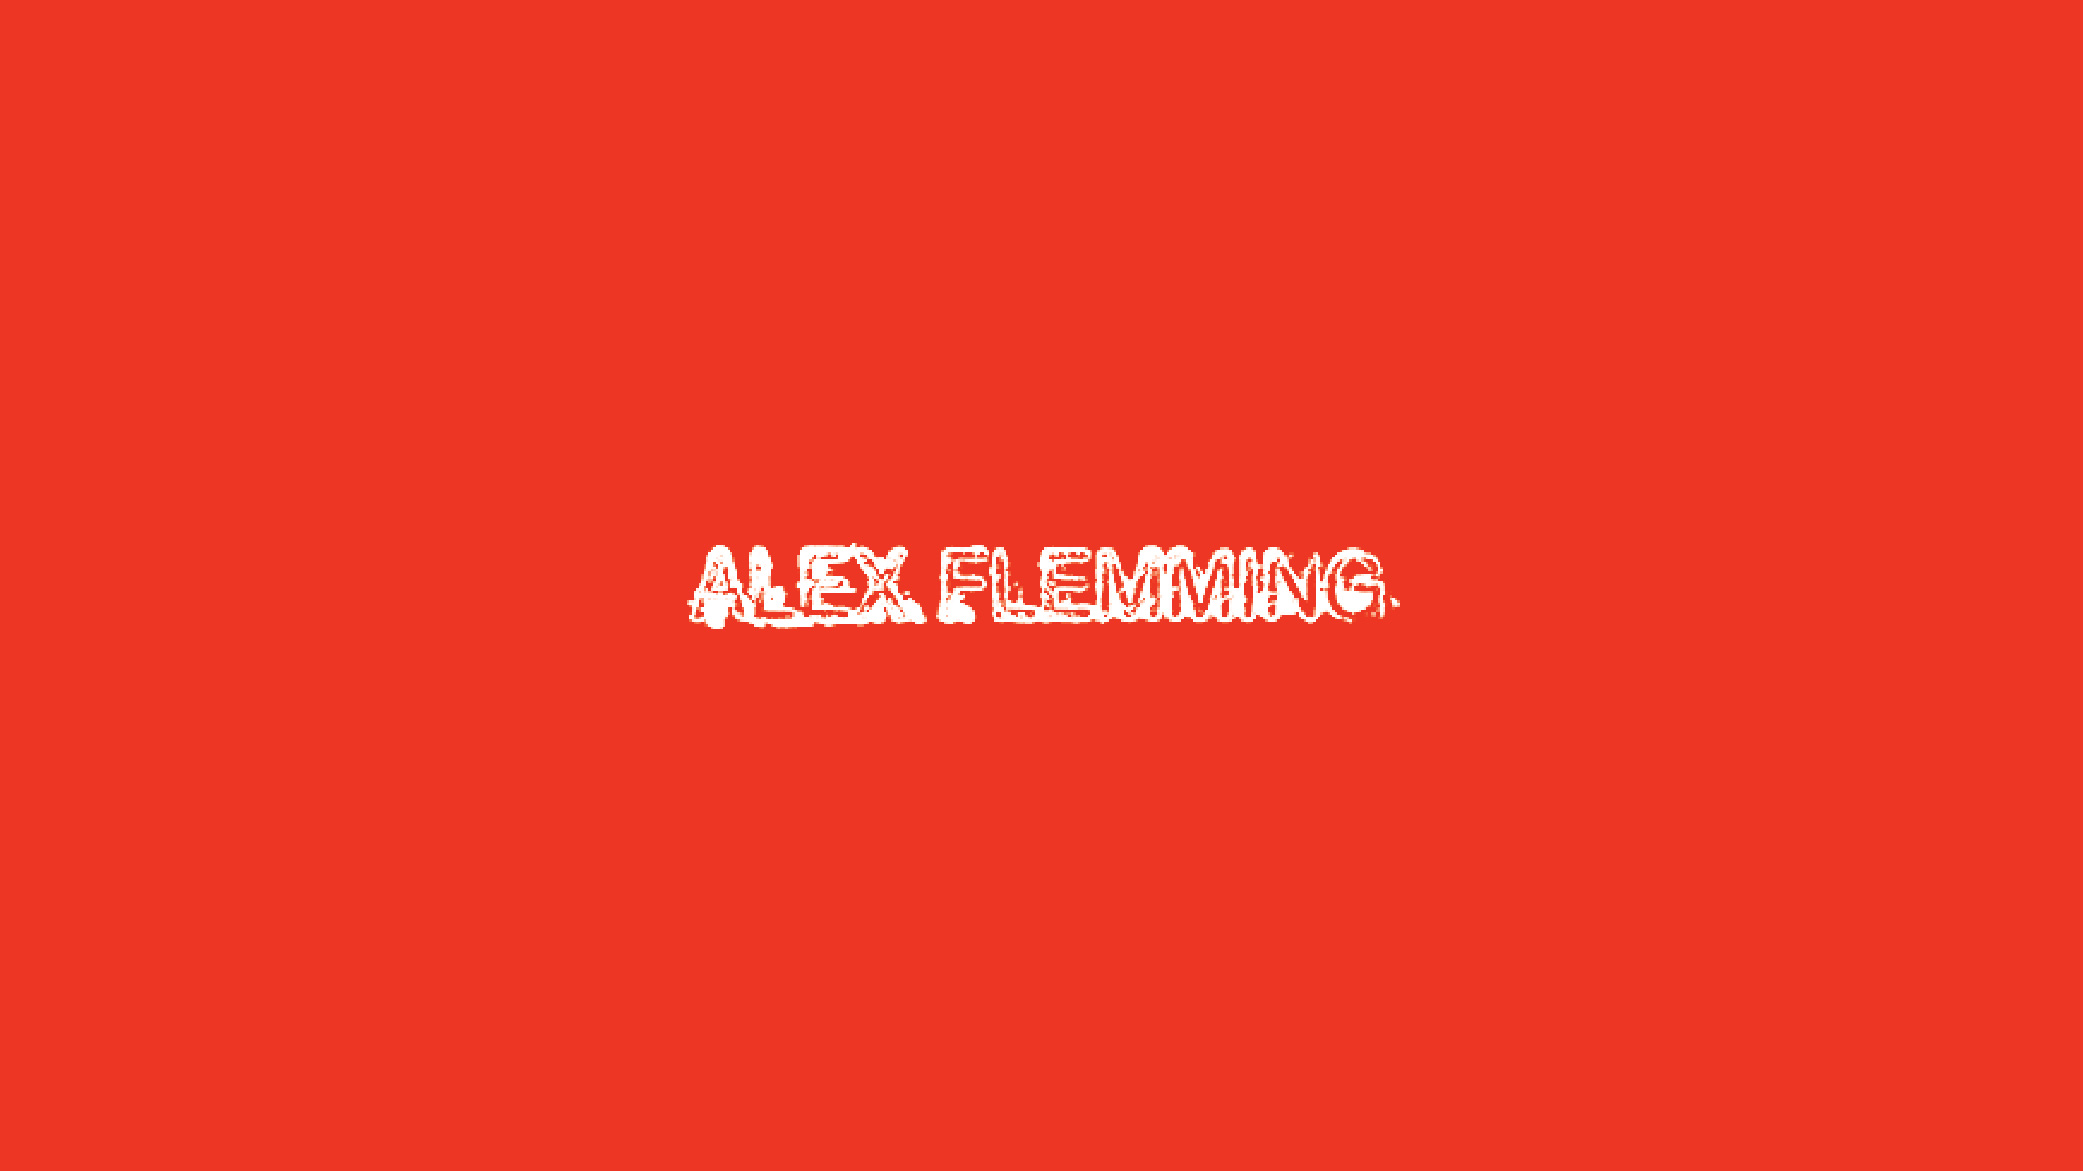 ALEX FLEMMING